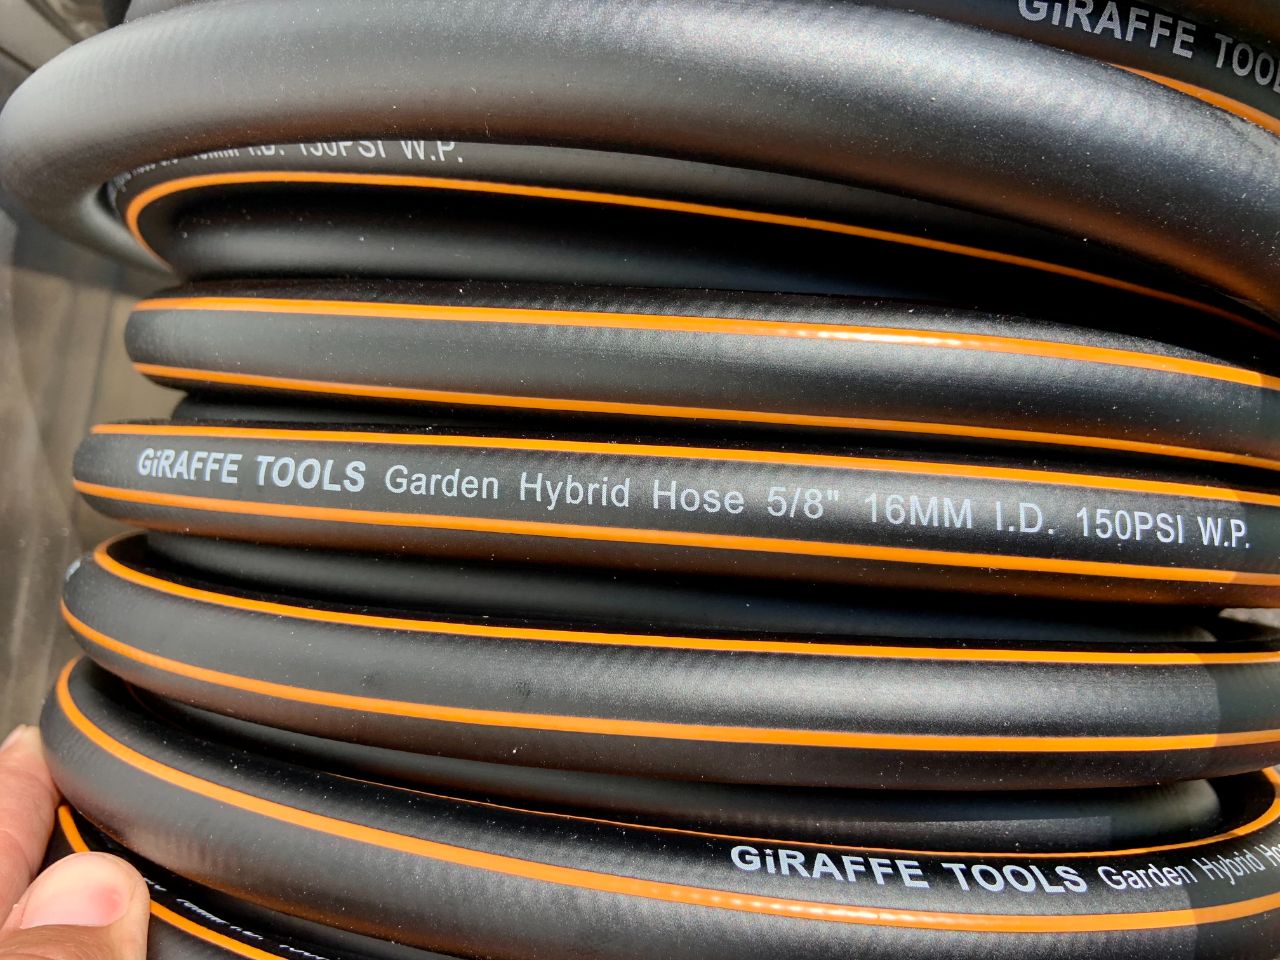 GiRAFFE TOOLS Wall Mounted Stainless Steel Garden Hose Reel ( 5/8 Hybrid Garden Hose)